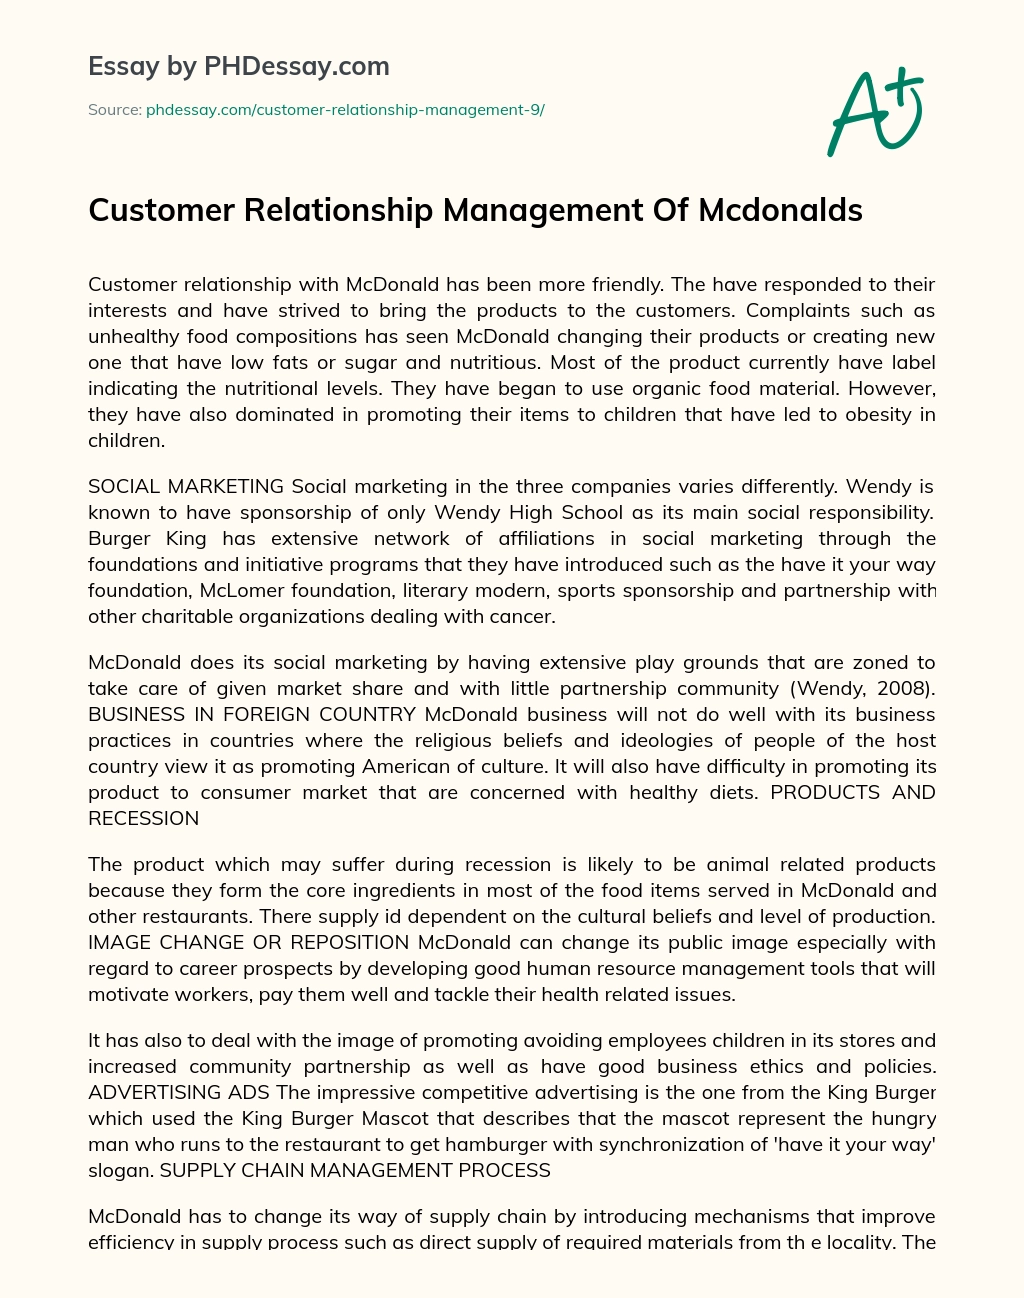 mcdonalds relationship marketing